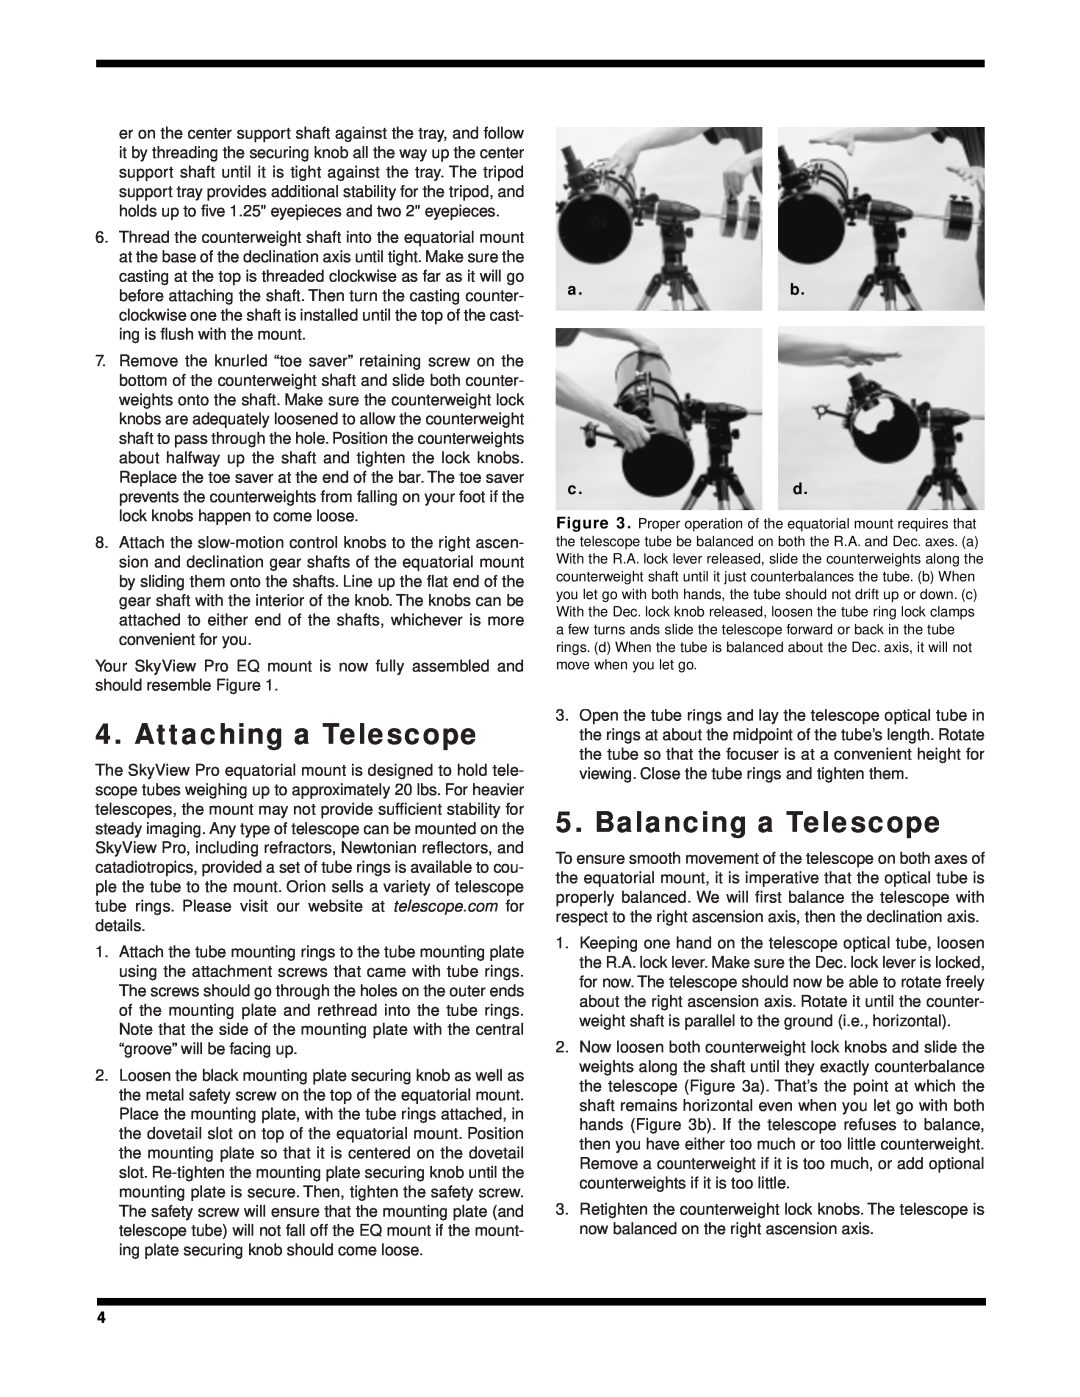 Orion 9829 instruction manual Attaching a Telescope, Balancing a Telescope, a.b c.d 